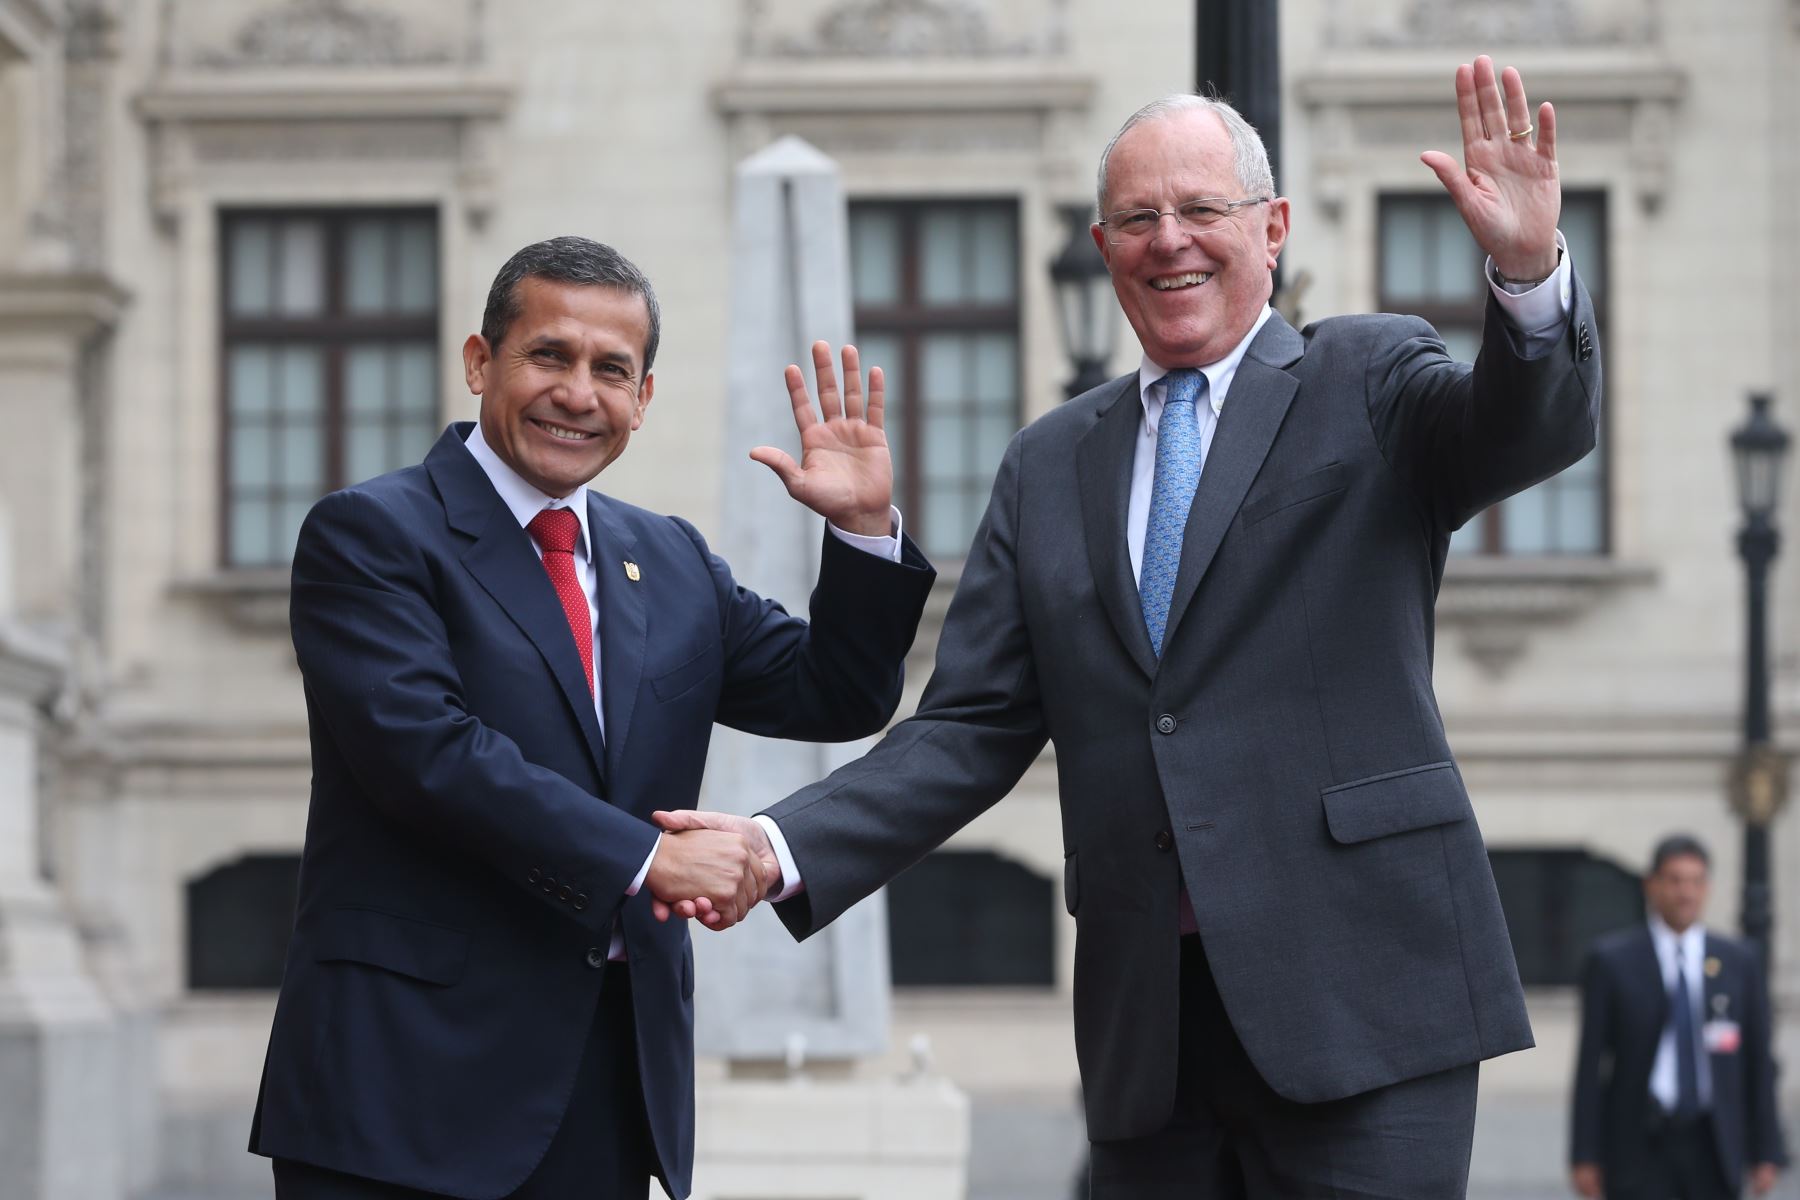 LIMA,PERÚ-JUNIO 22. Presidente Ollanta Humala recibe al presidente electo Pedro Pablo  Kuczynski en Palacio de Gobierno.

Foto:ANDINA/Oscar Farje Gomero.